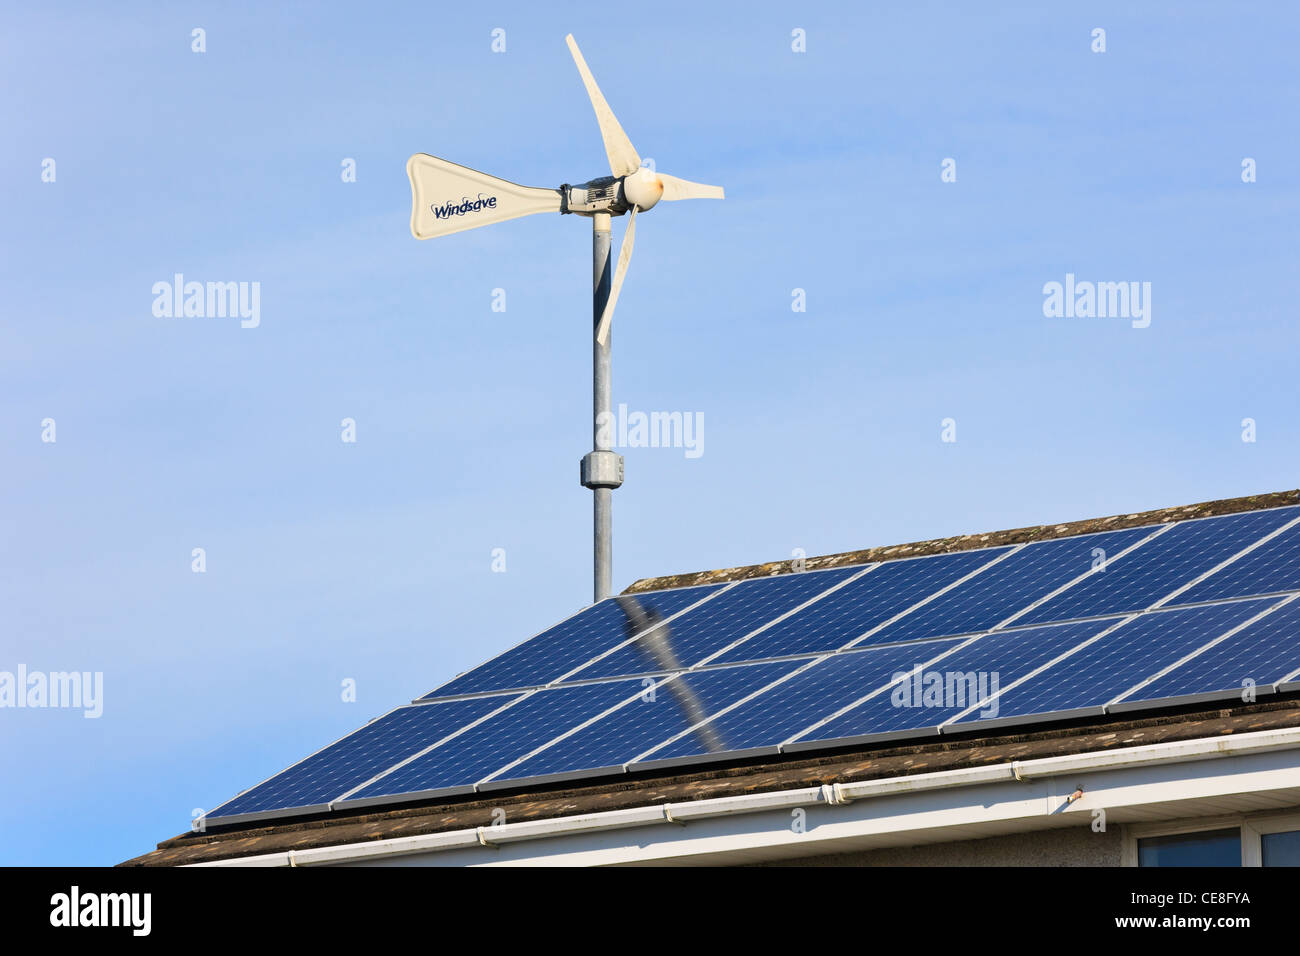 UK. Windsave micro wind turbine and solar panels on a ...